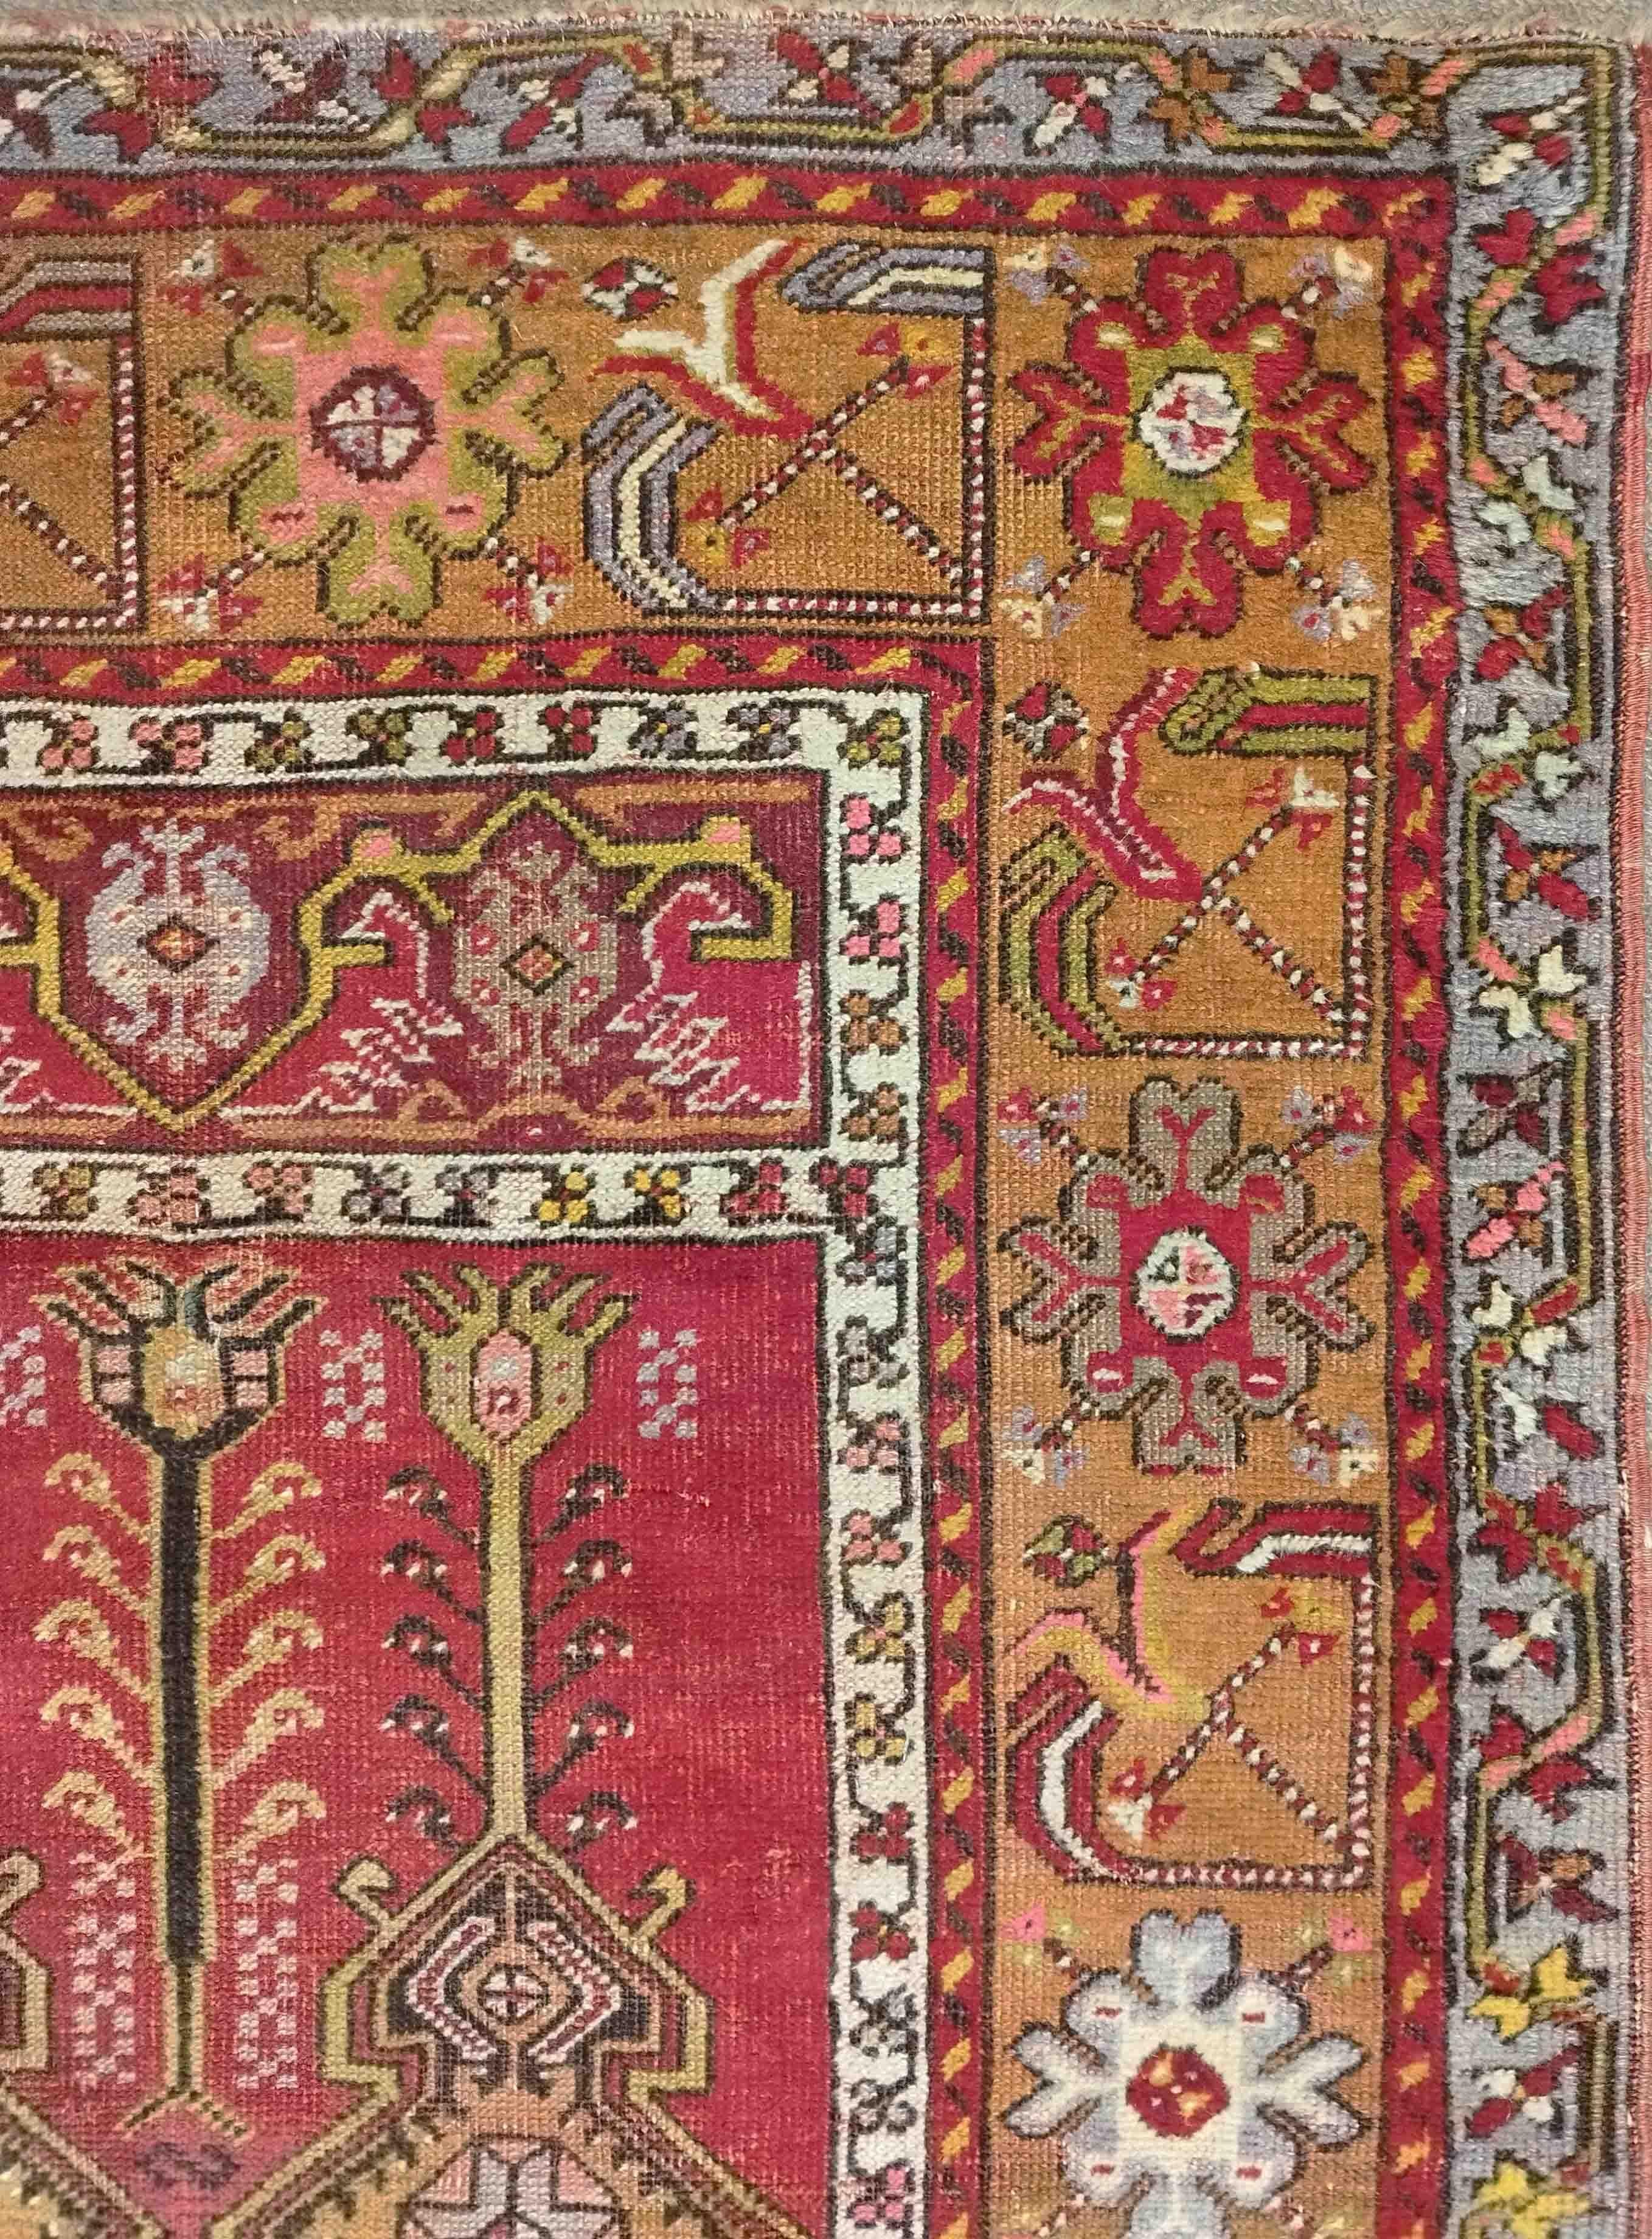  Kirchir Turkish Carpet, 19th Century - N° 728 For Sale 4